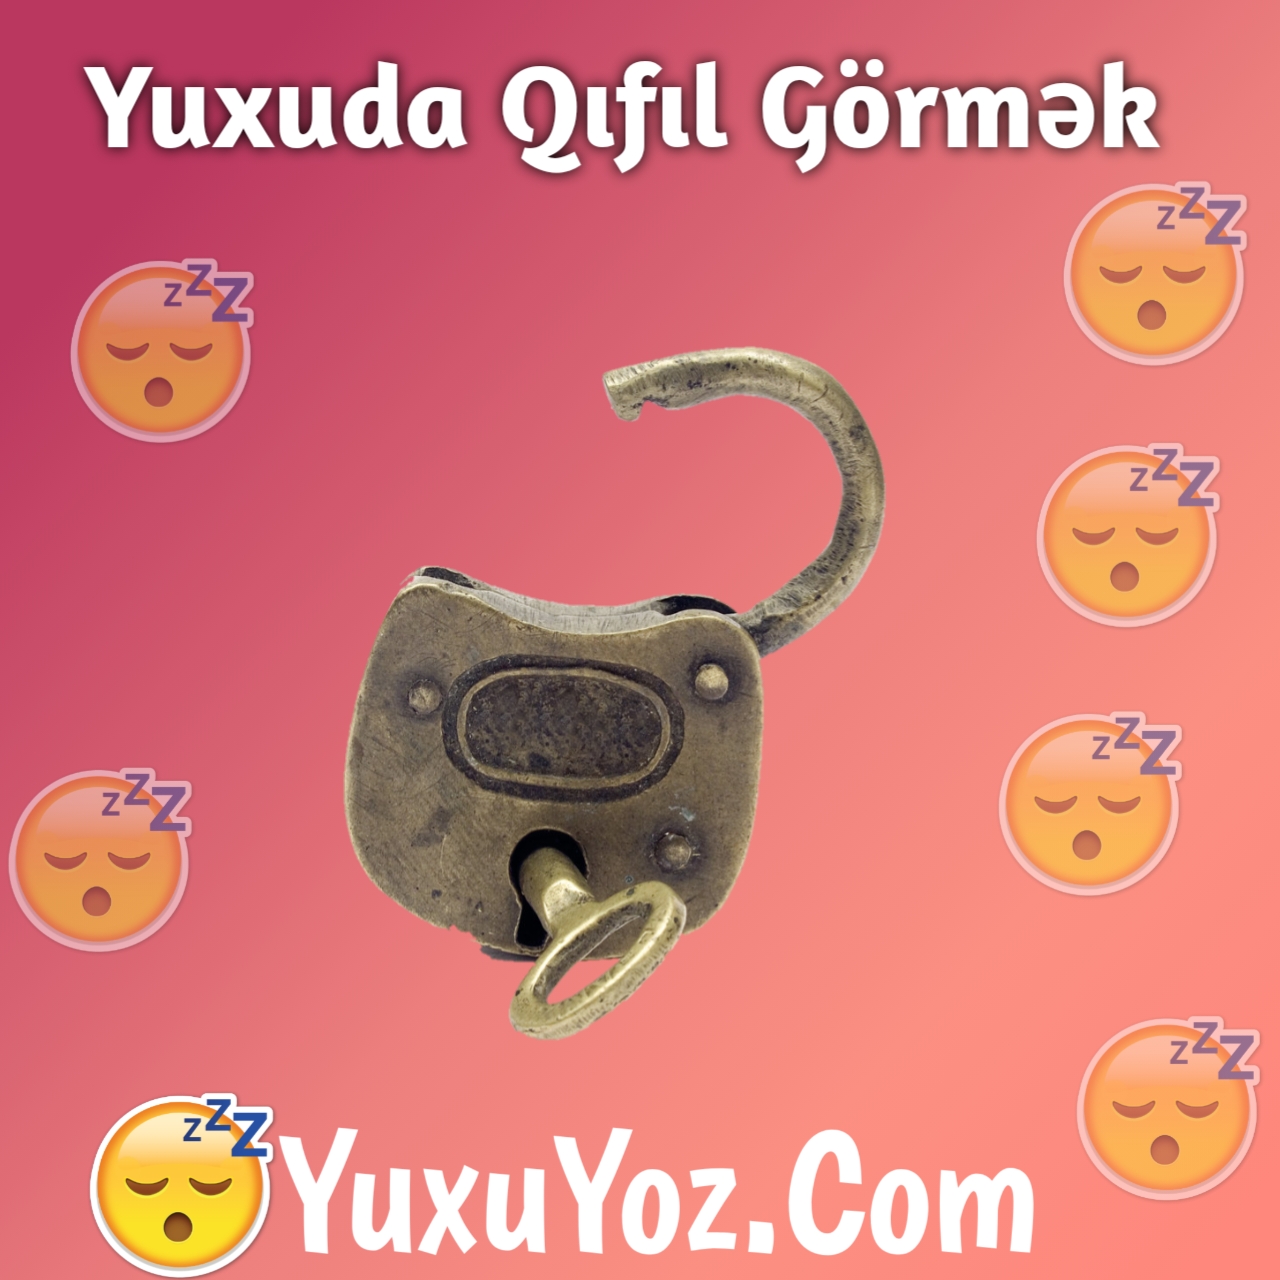 Yuxuda Qifil Gormek